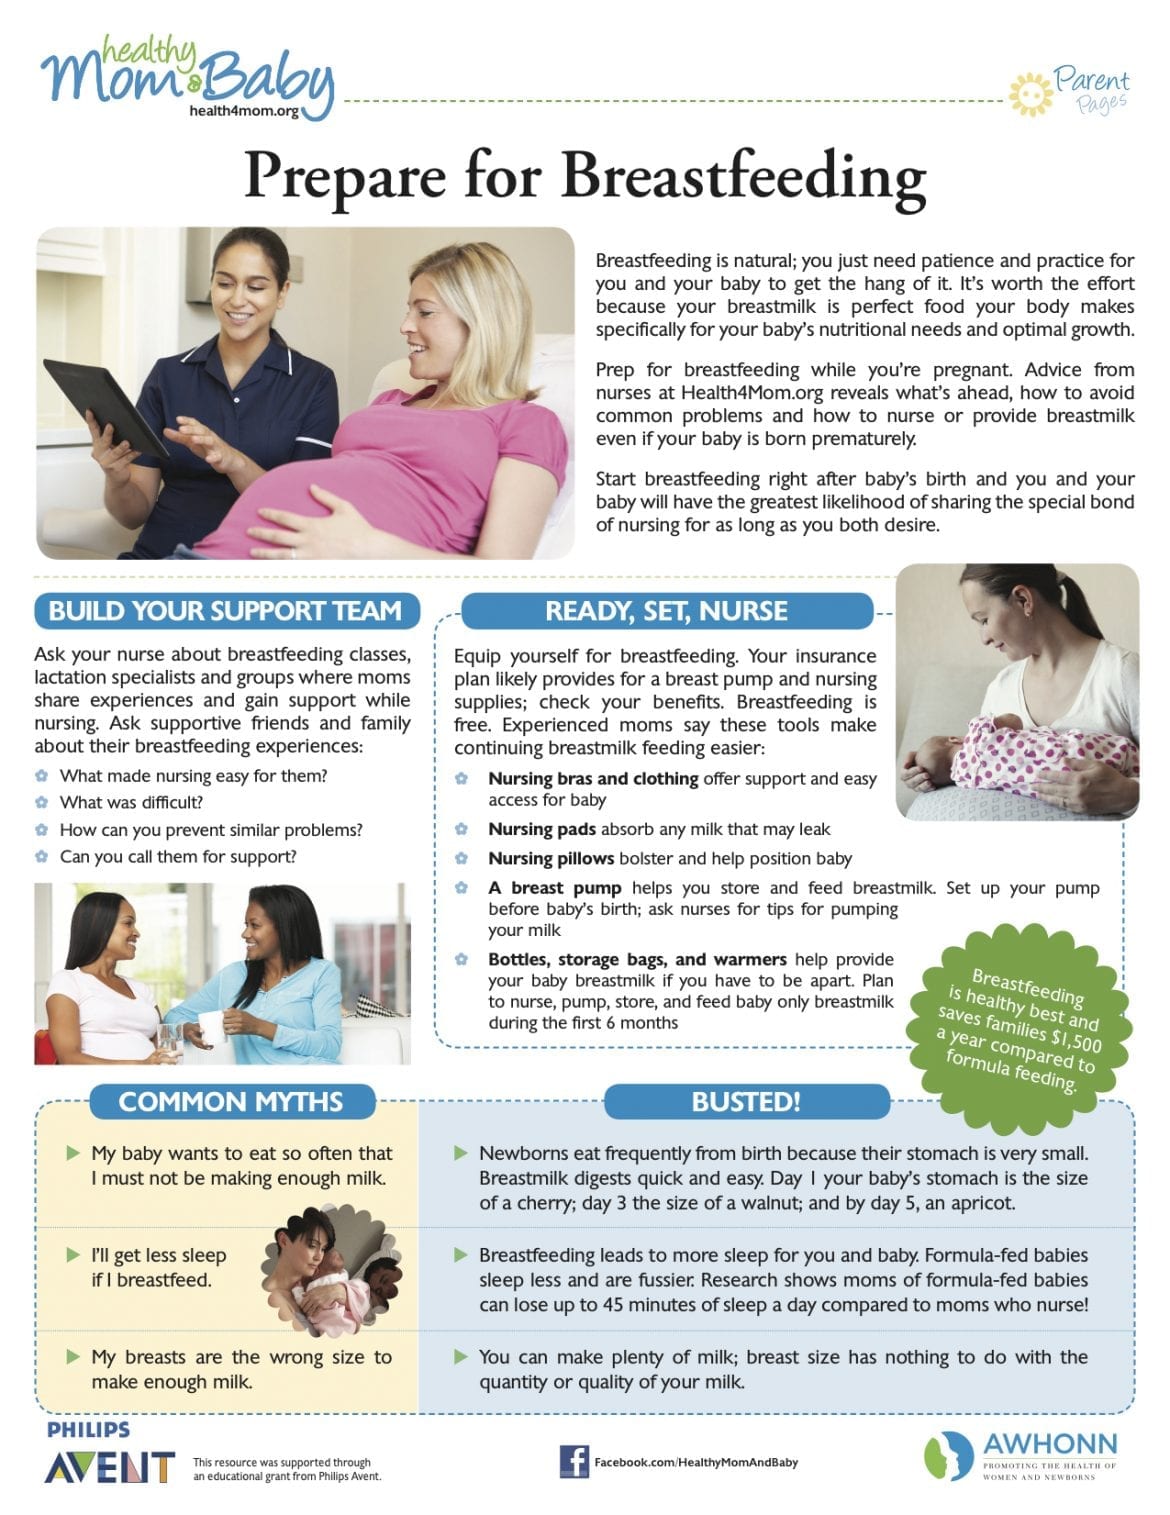 Breastfeeding Basics: You, Your Baby & Your Nurses - Healthy Mom & Baby